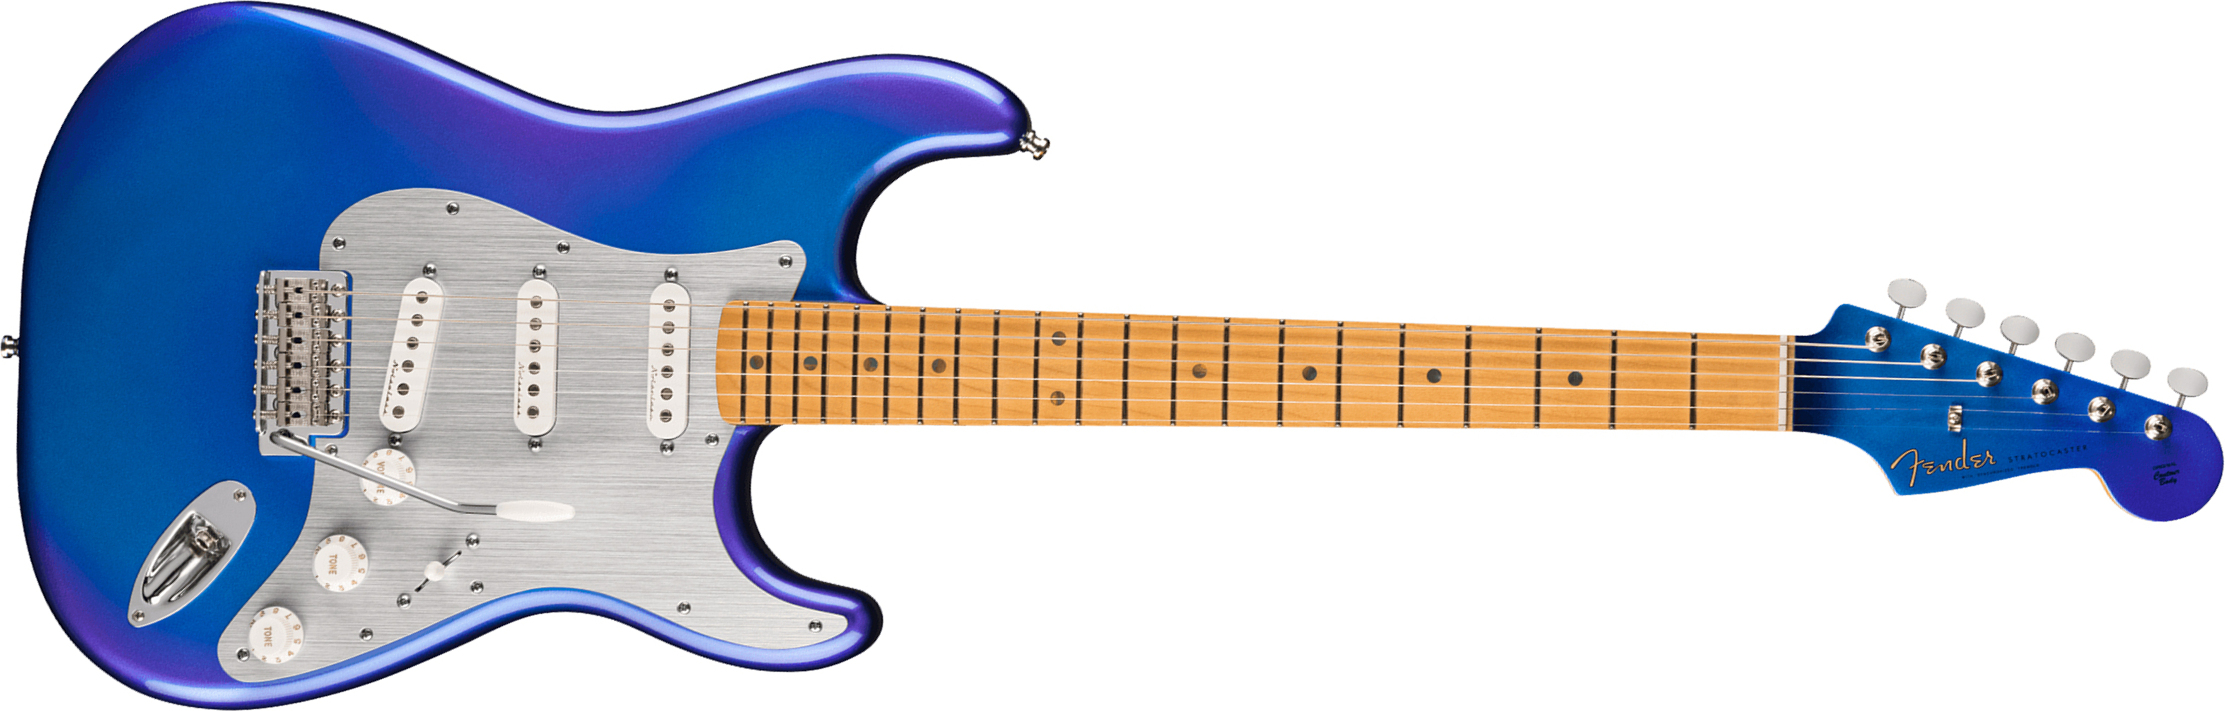 Fender H.e.r. Strat Ltd Signature Mex 3s Trem Mn - Blue Marlin - Str shape electric guitar - Main picture